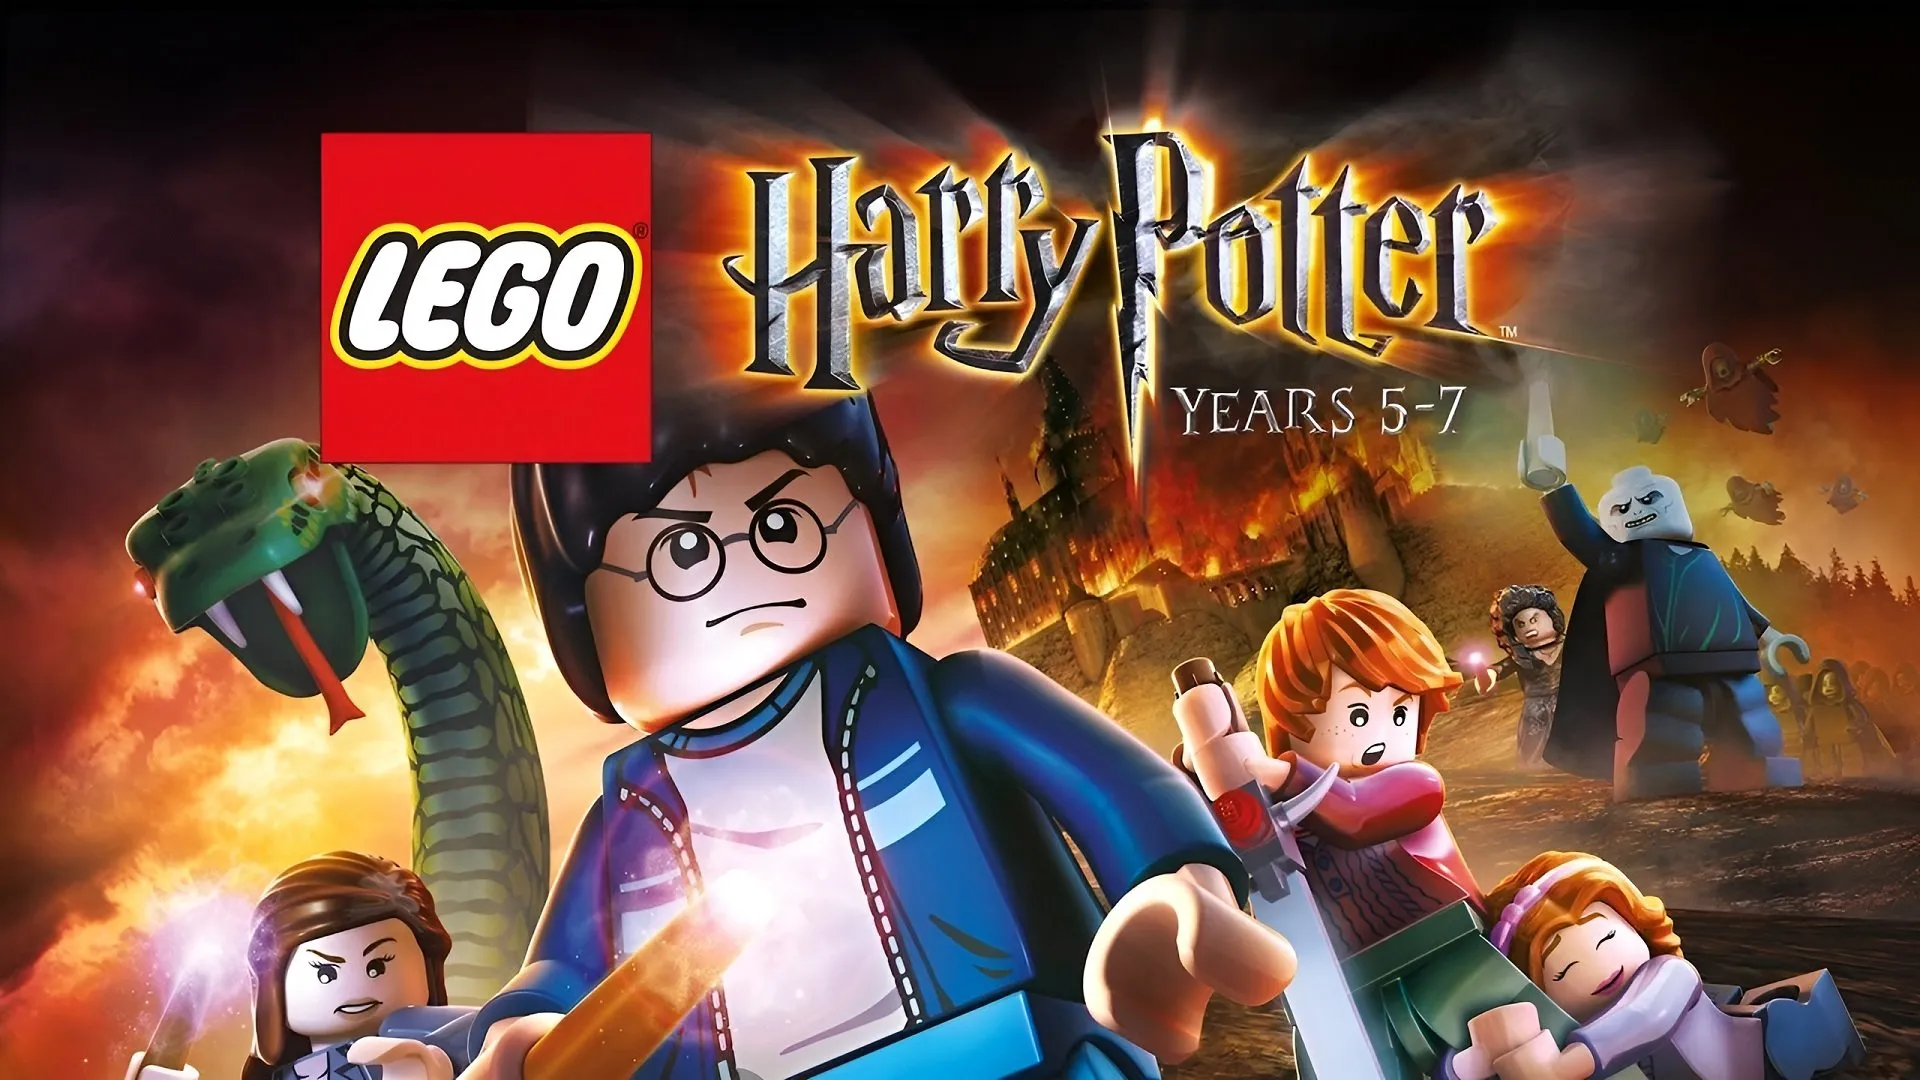 LEGO harry Potter 5-7